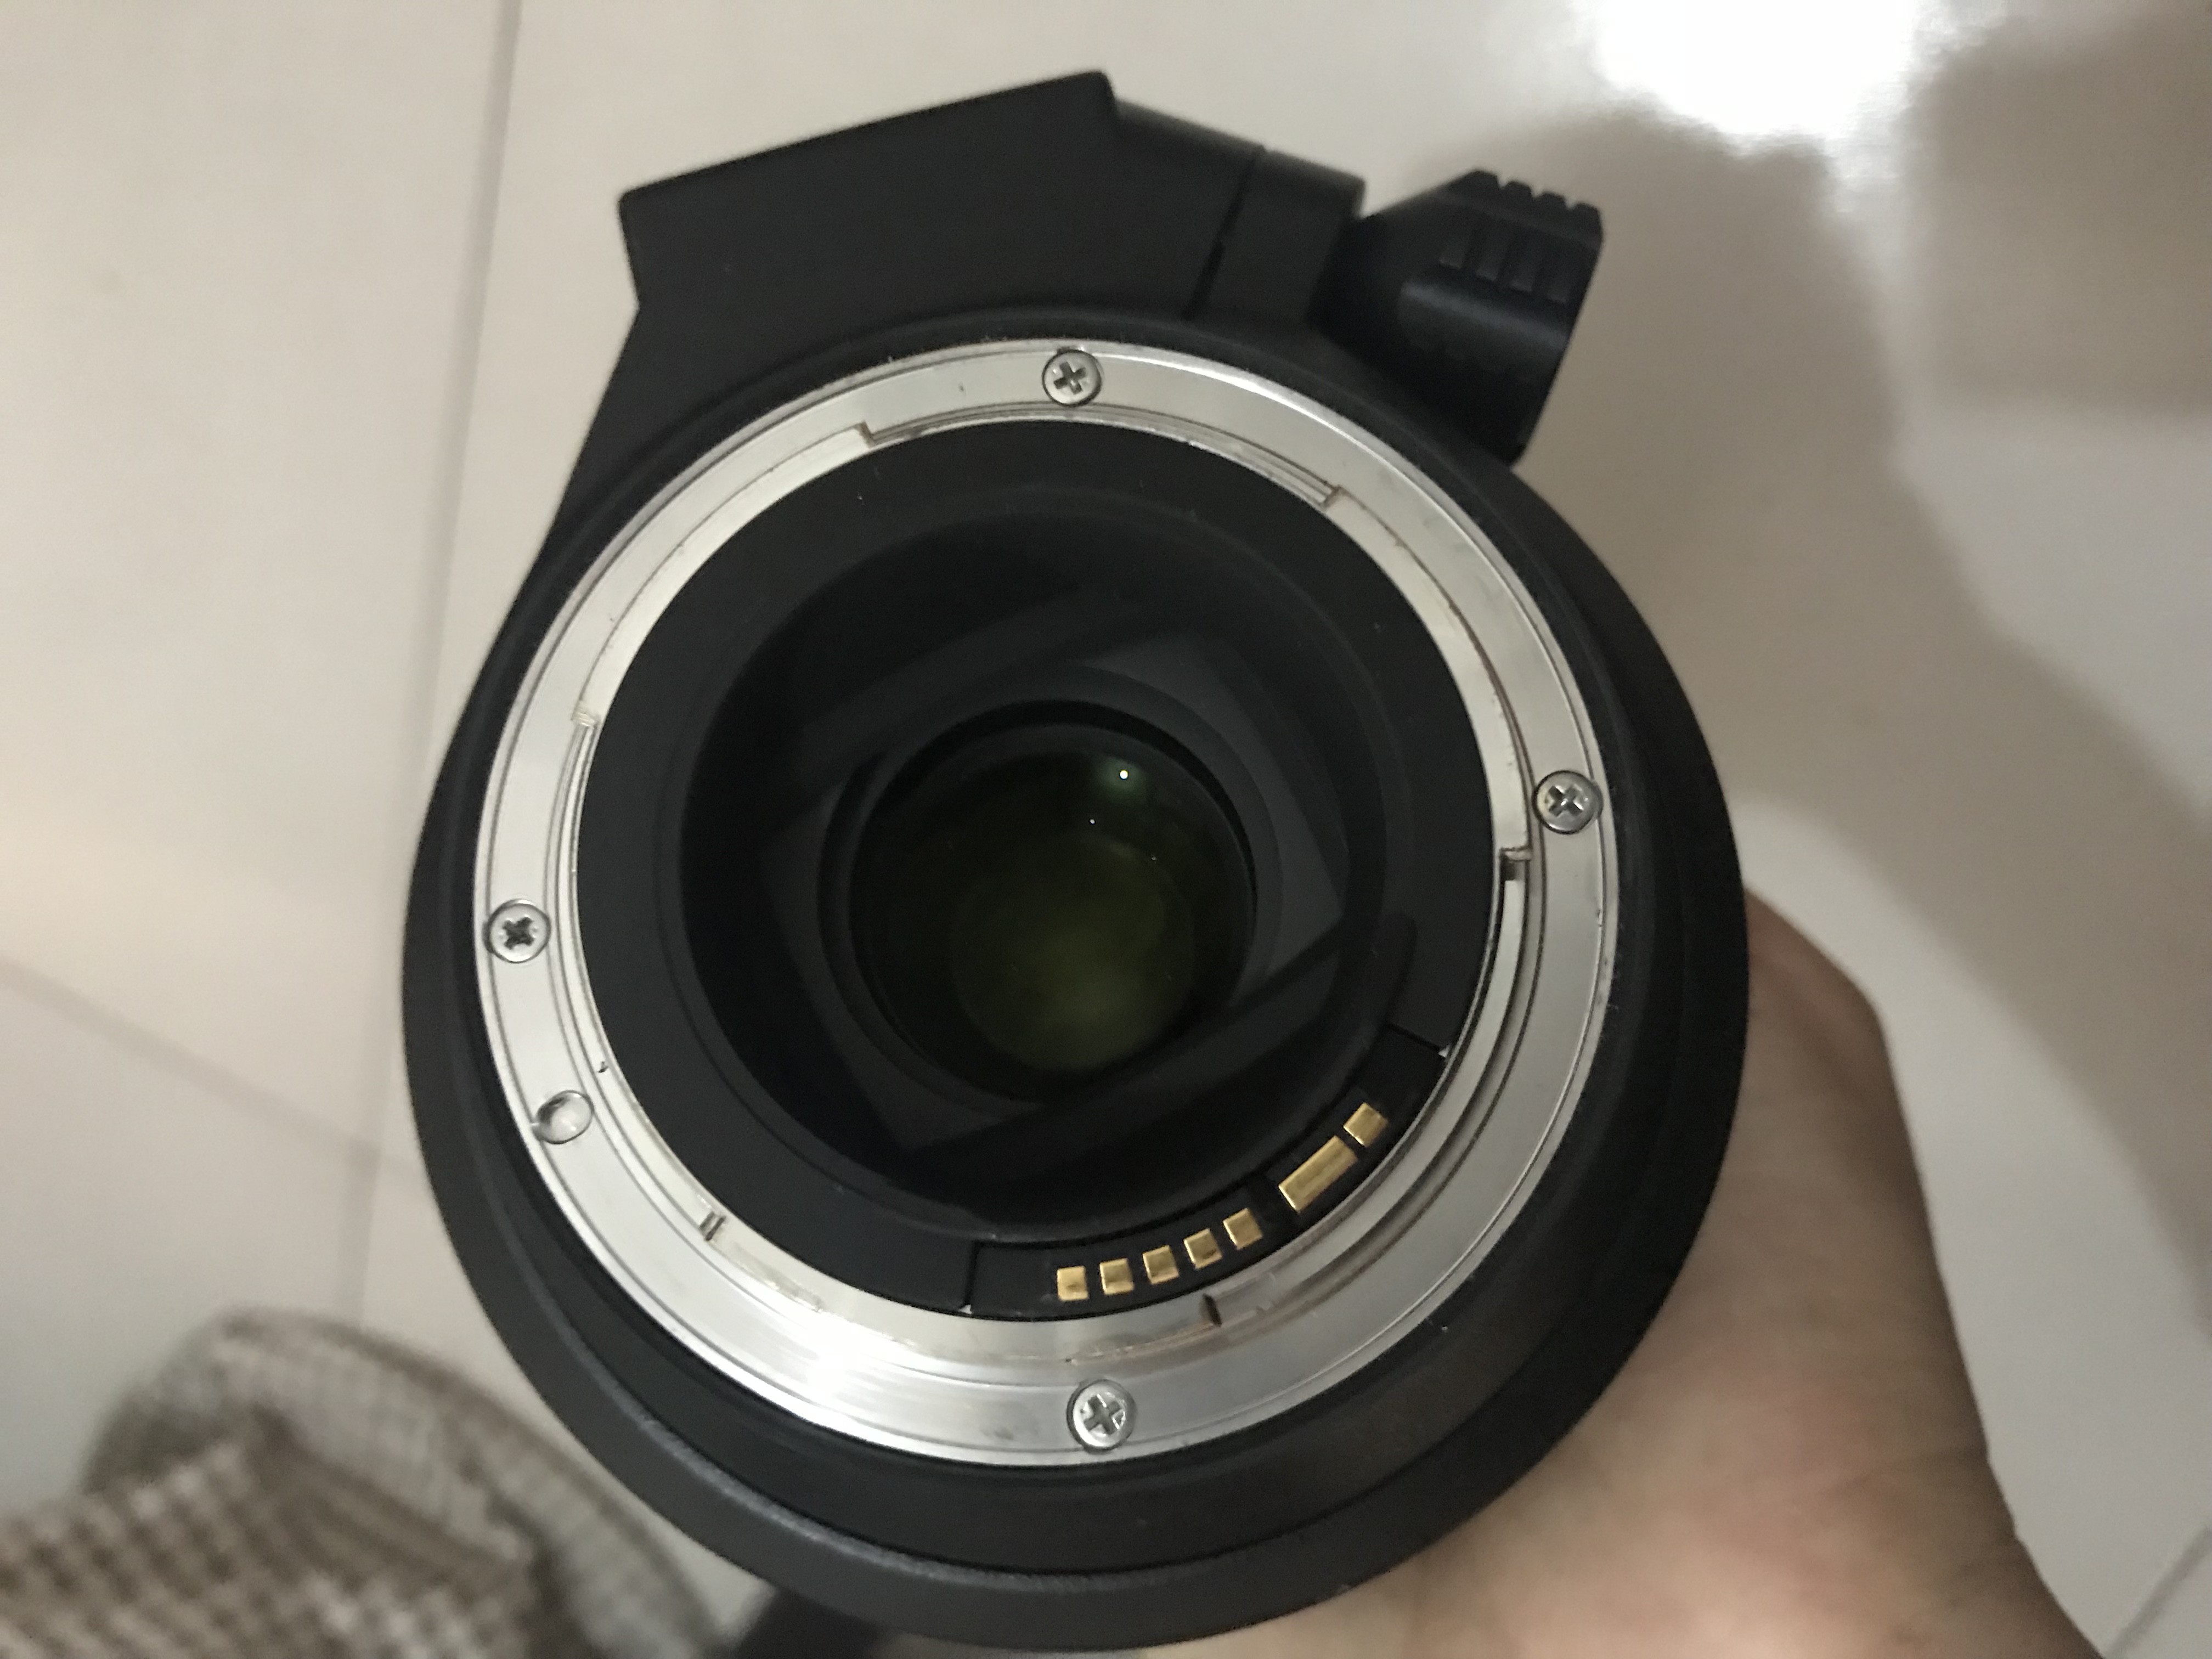 腾龙 SP 150-600mm f/5-6.3 Di VC USD（A011）